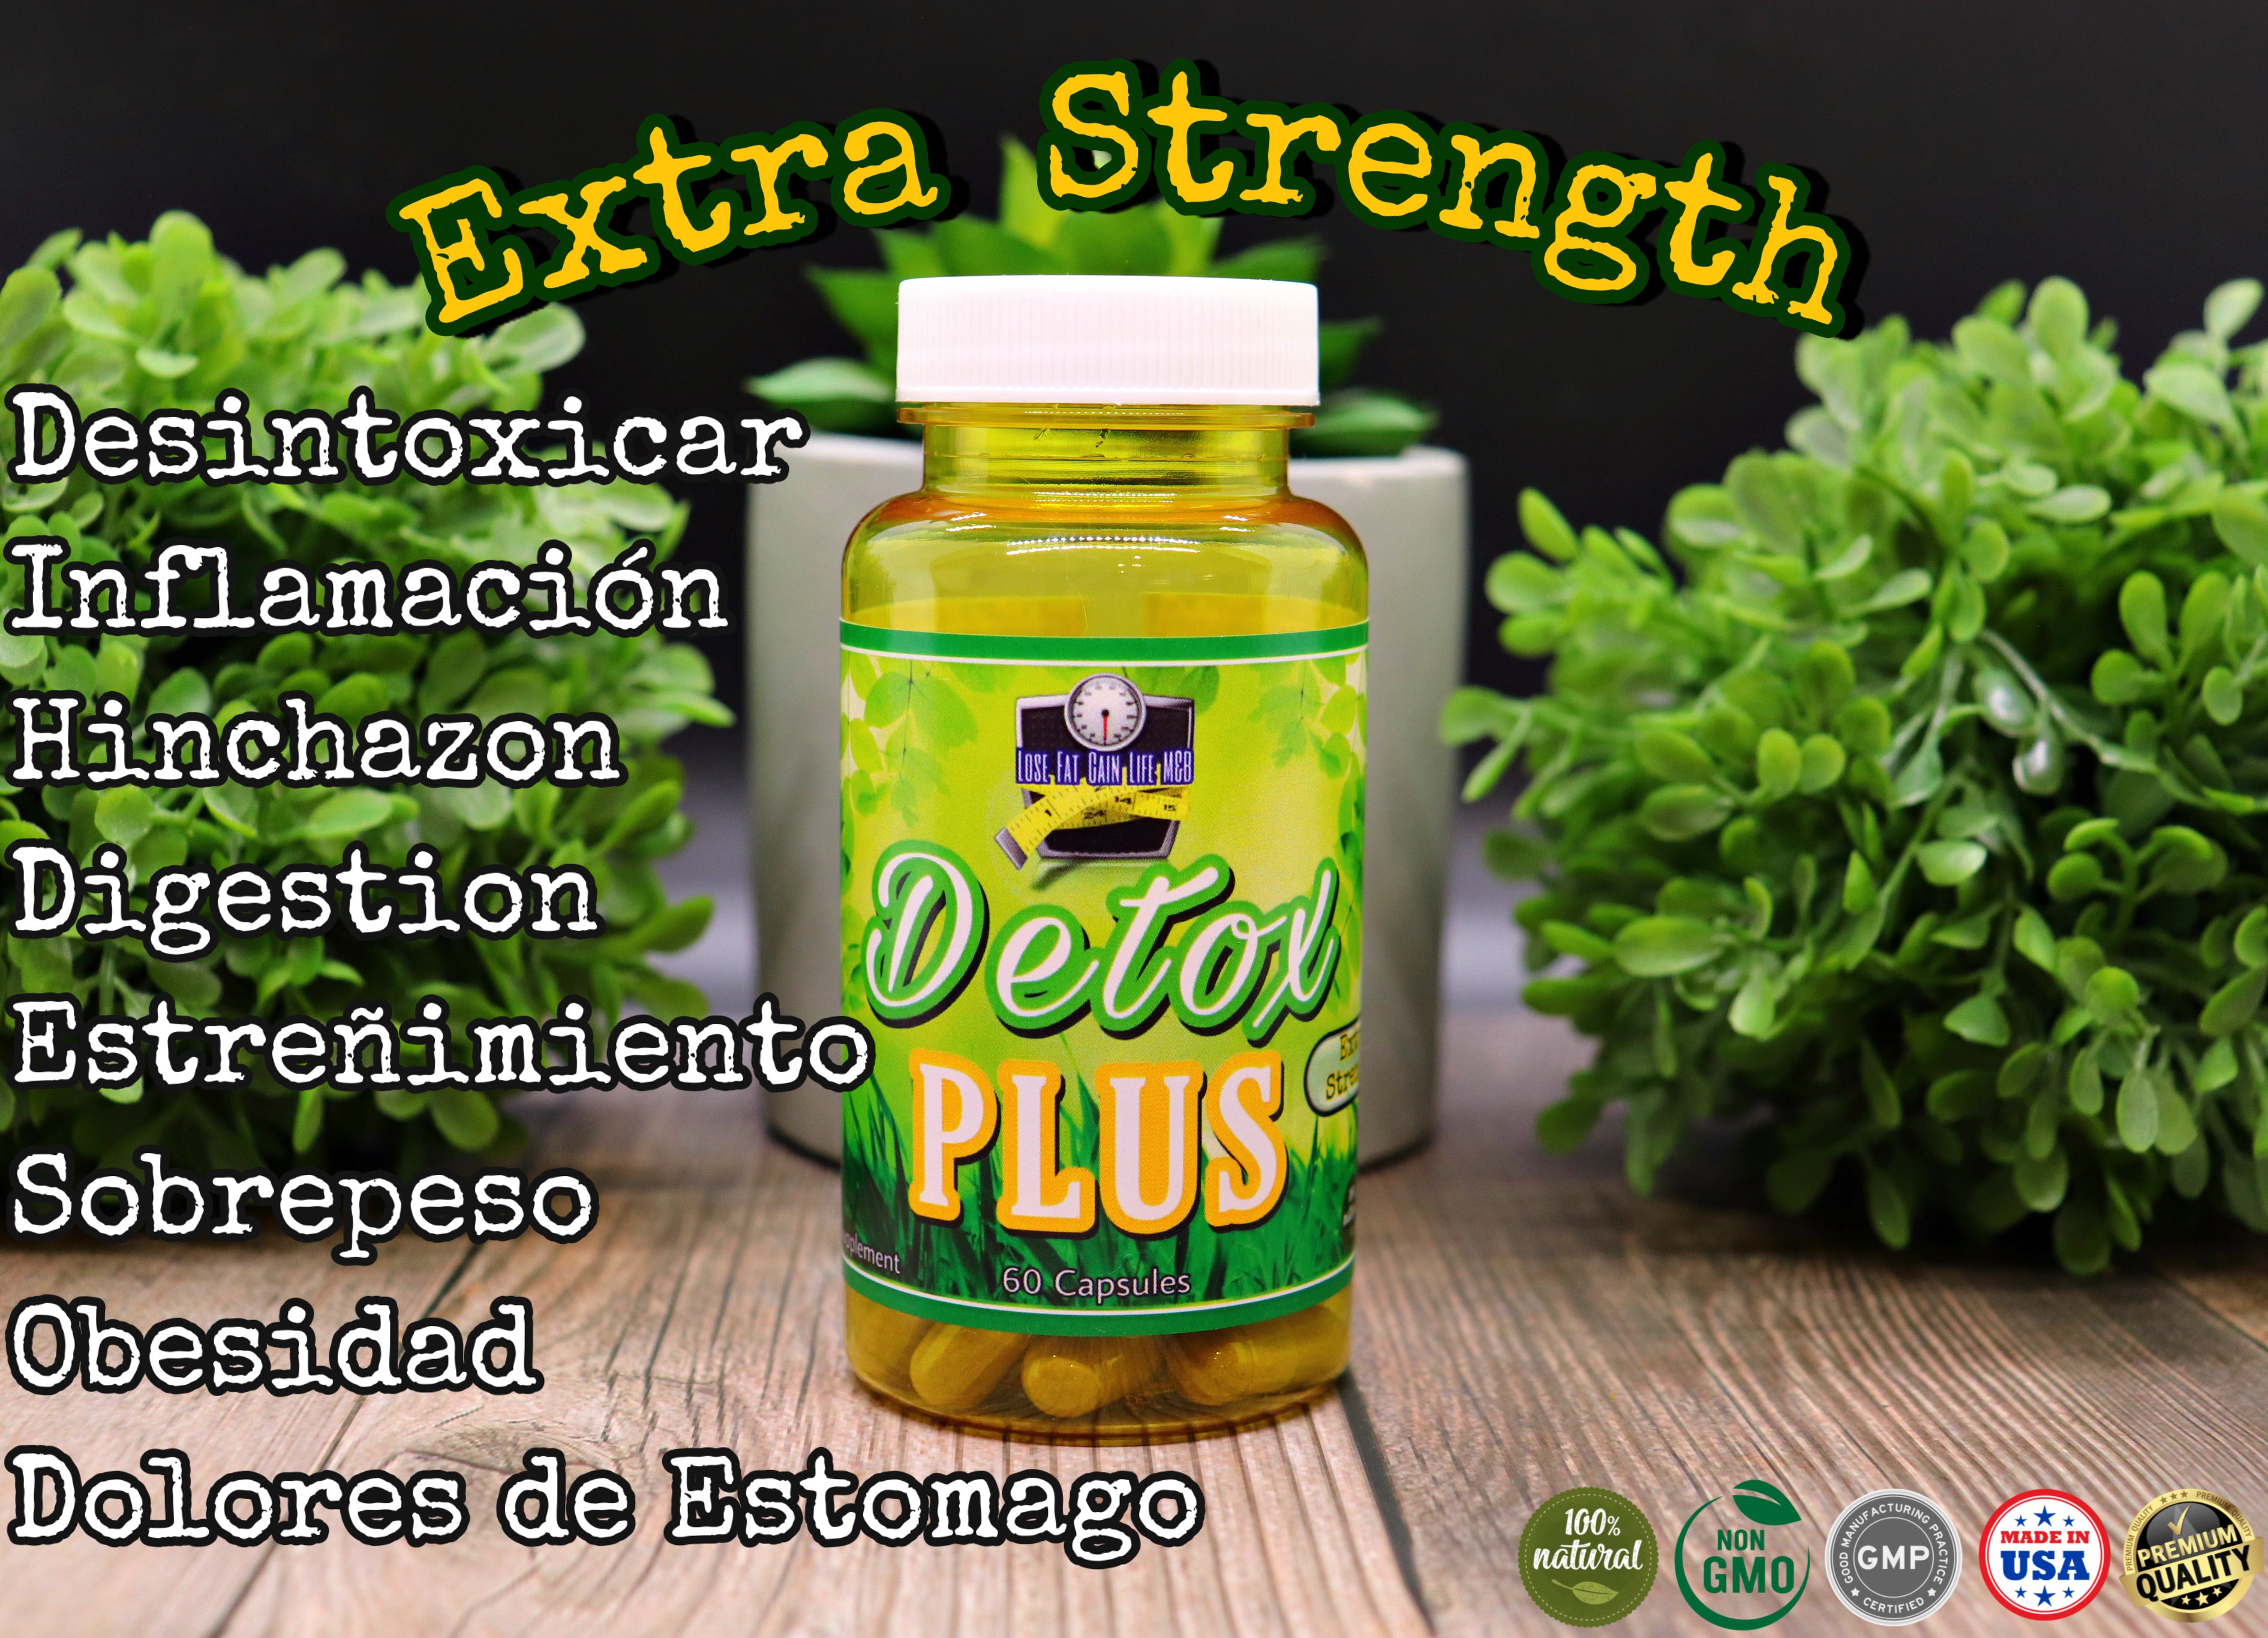 Detox Plus Extra Strength